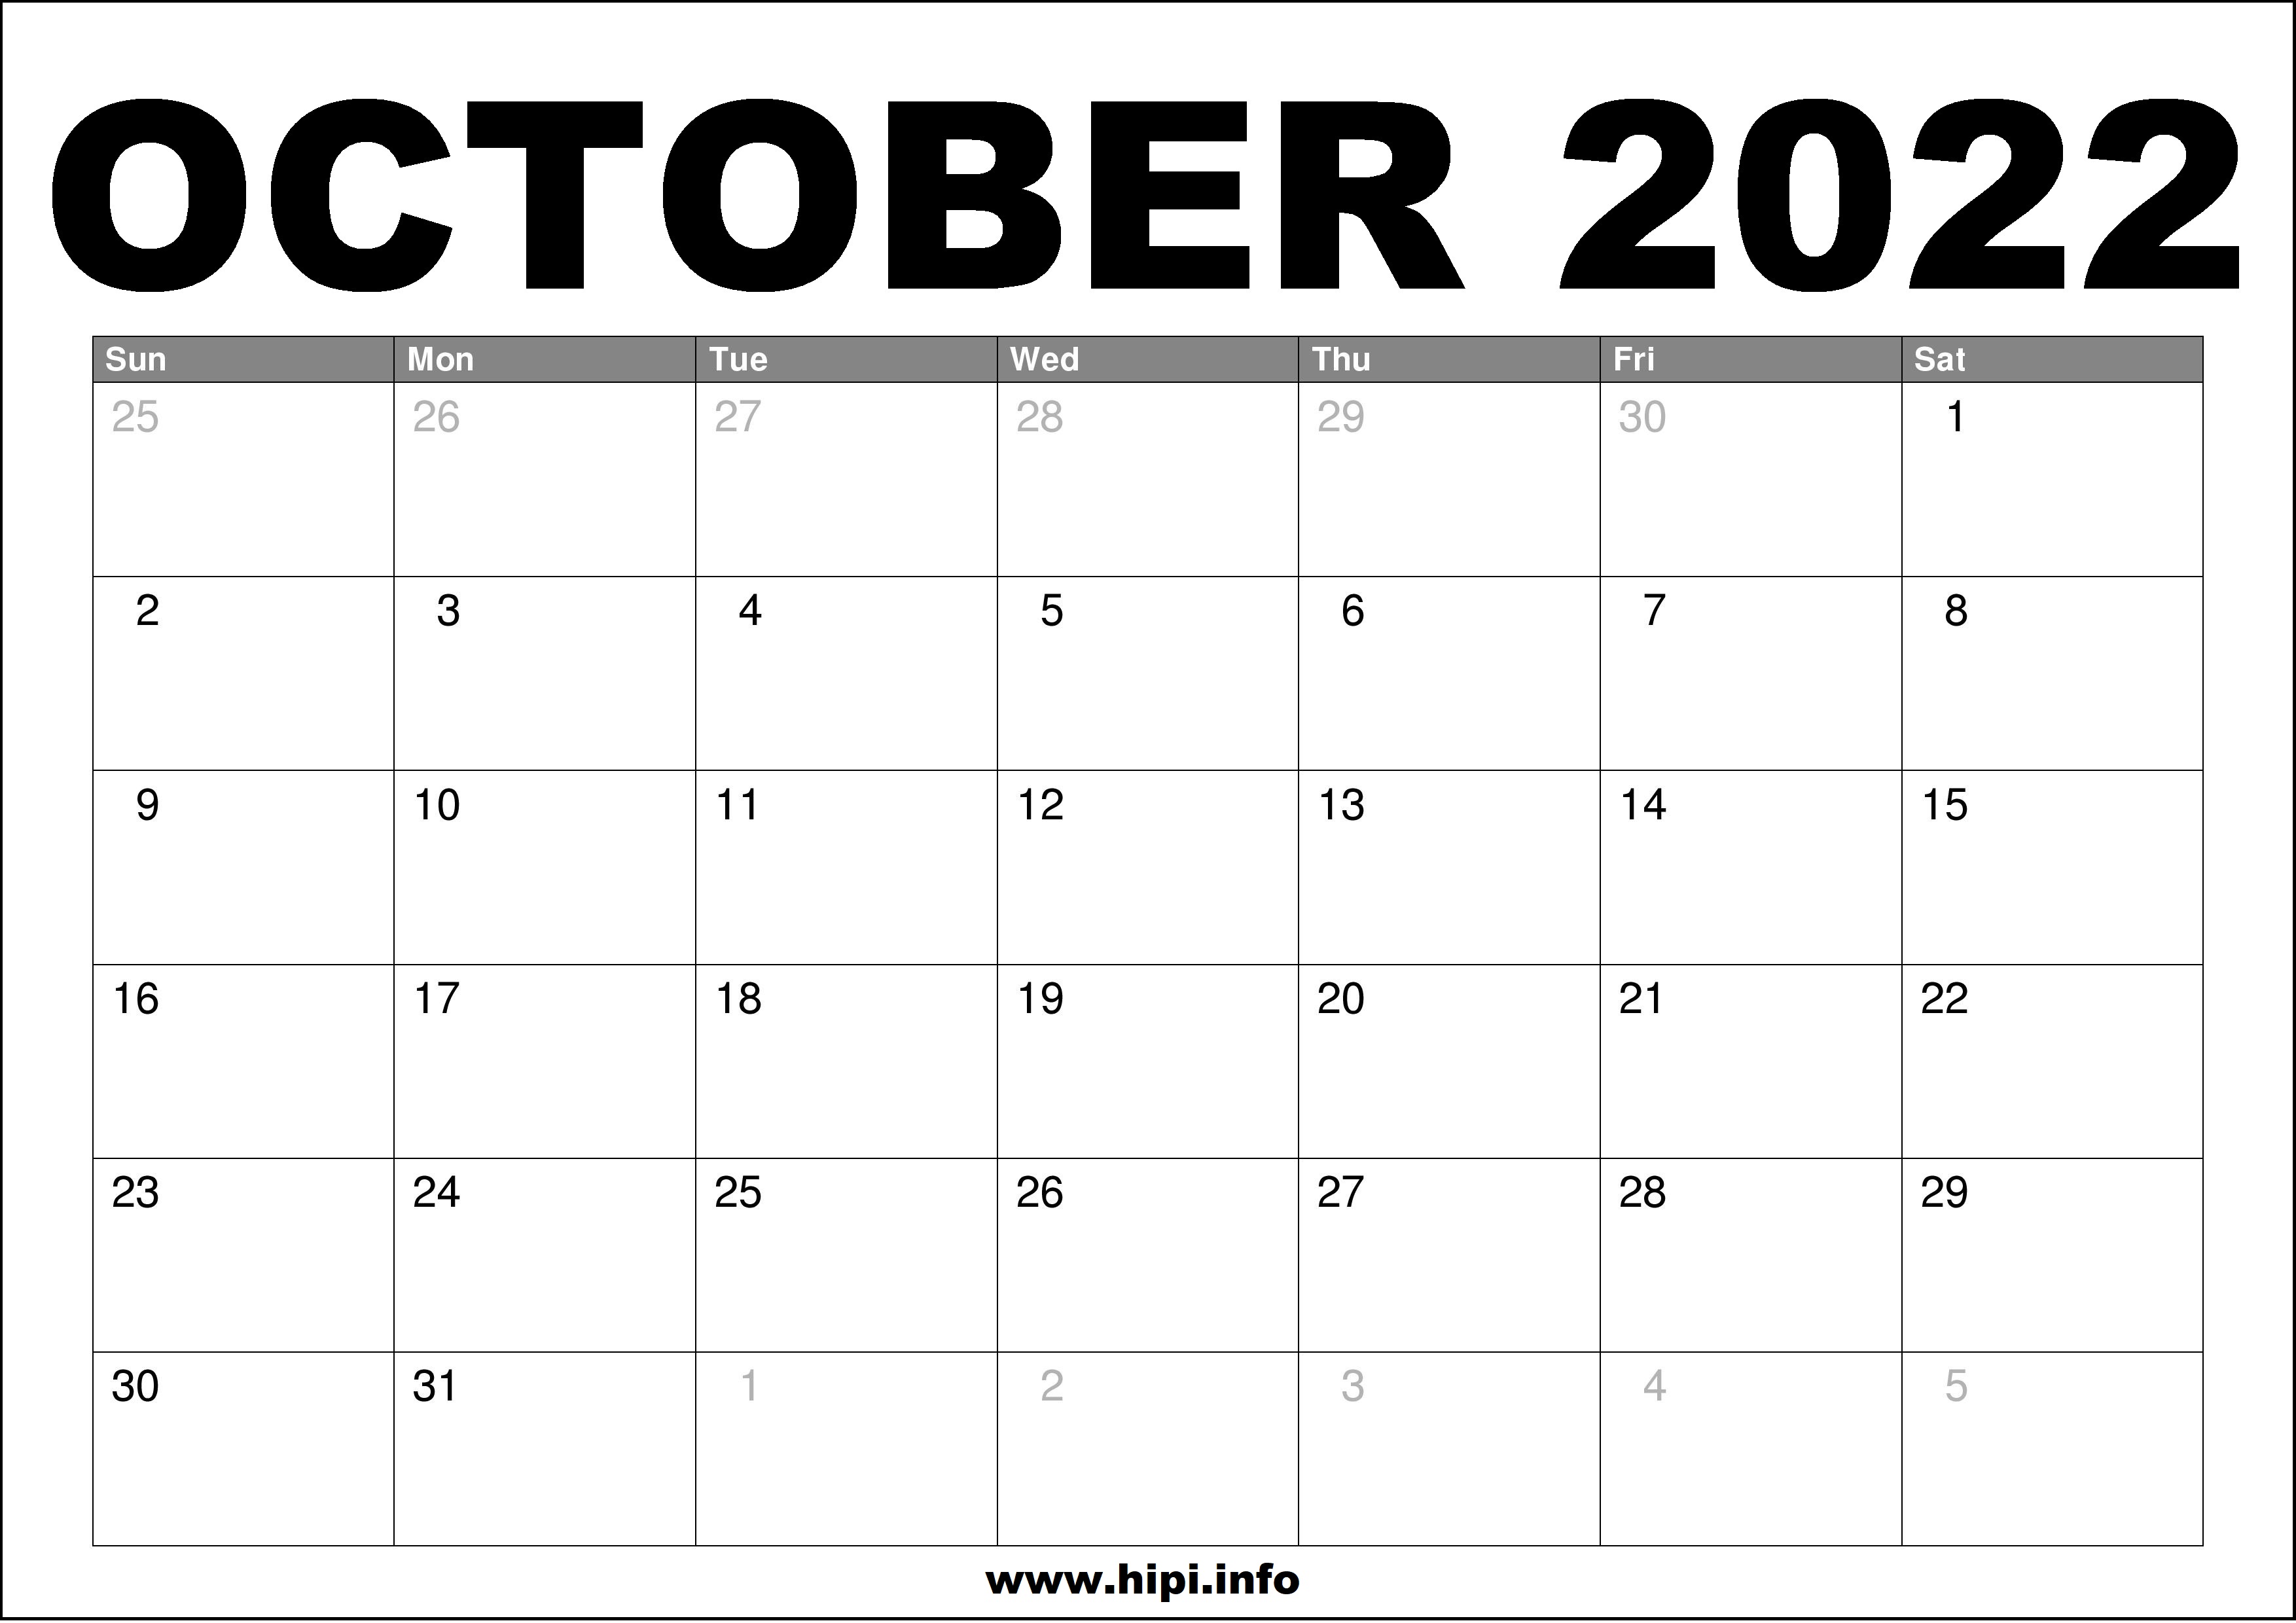 October Blank Calendar 2022 October 2022 Calendar Printable Free - Hipi.info | Calendars Printable Free